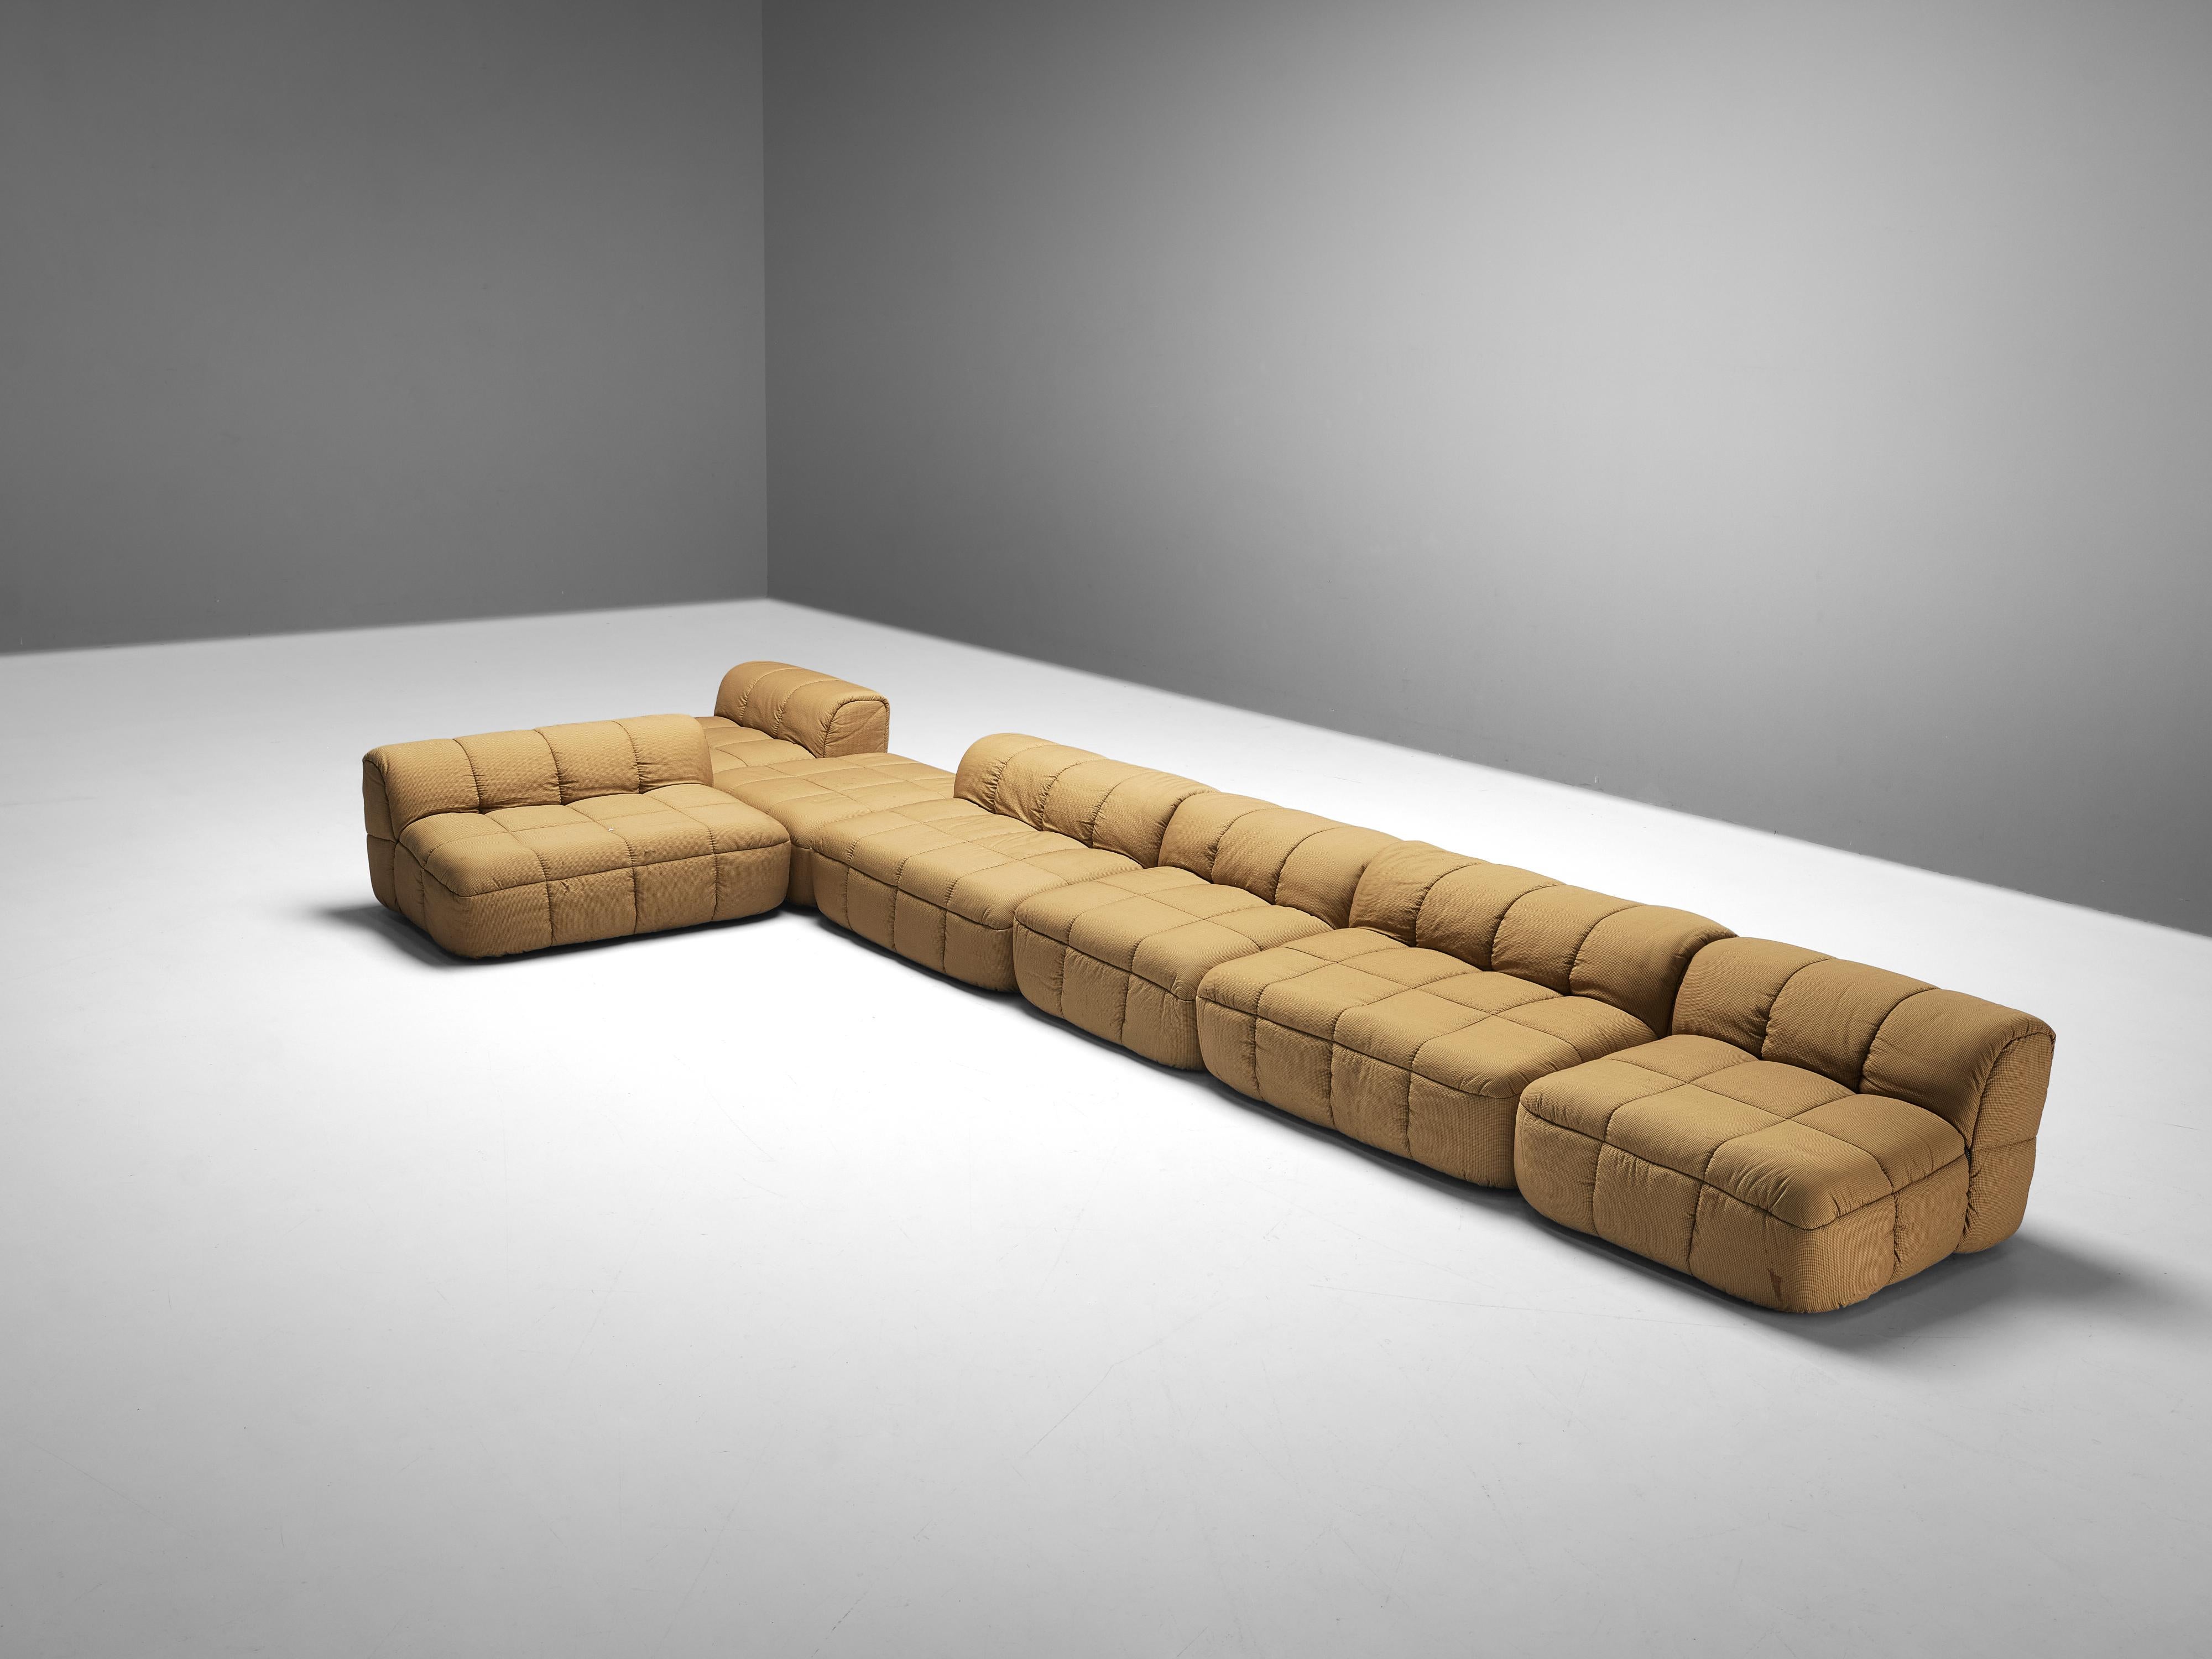 Cini Boeri for Arflex Modular 'Strips' Sofa In Good Condition For Sale In Waalwijk, NL